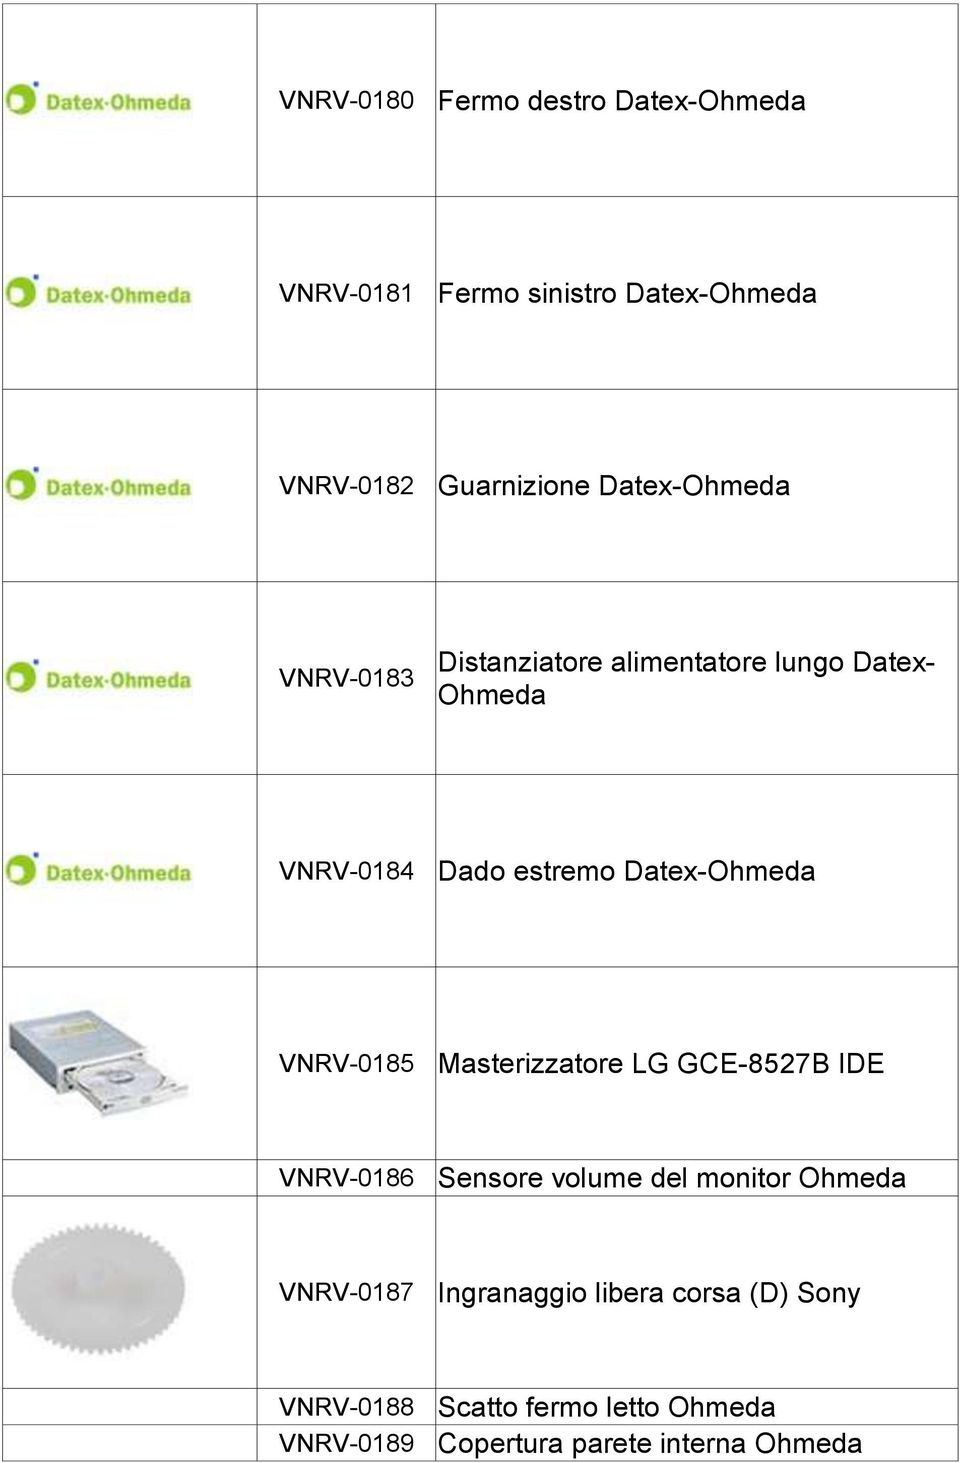 Datex-Ohmeda VNRV-0185 Masterizzatore LG GCE-8527B IDE VNRV-0186 Sensore volume del monitor Ohmeda